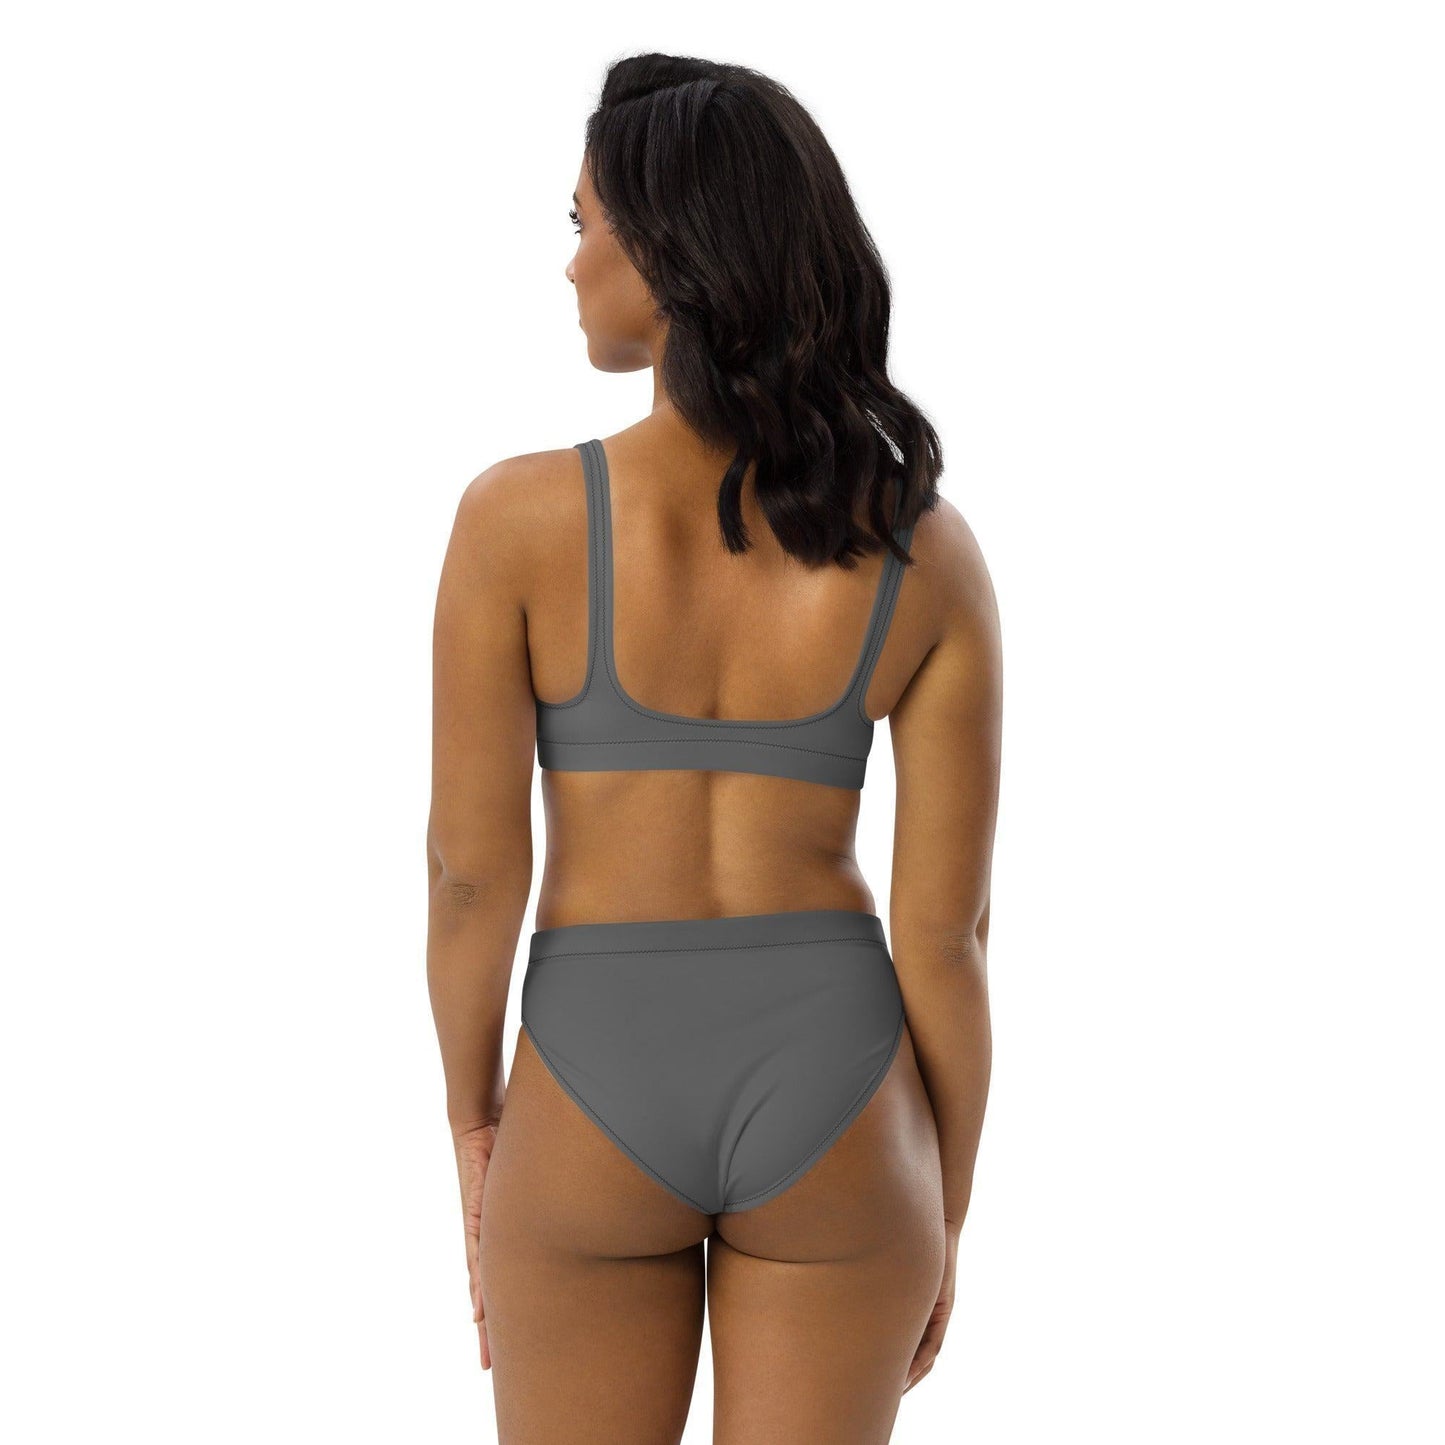 Grauer High Waist Bikini -- Grauer High Waist Bikini - undefined Bikini | JLR Design